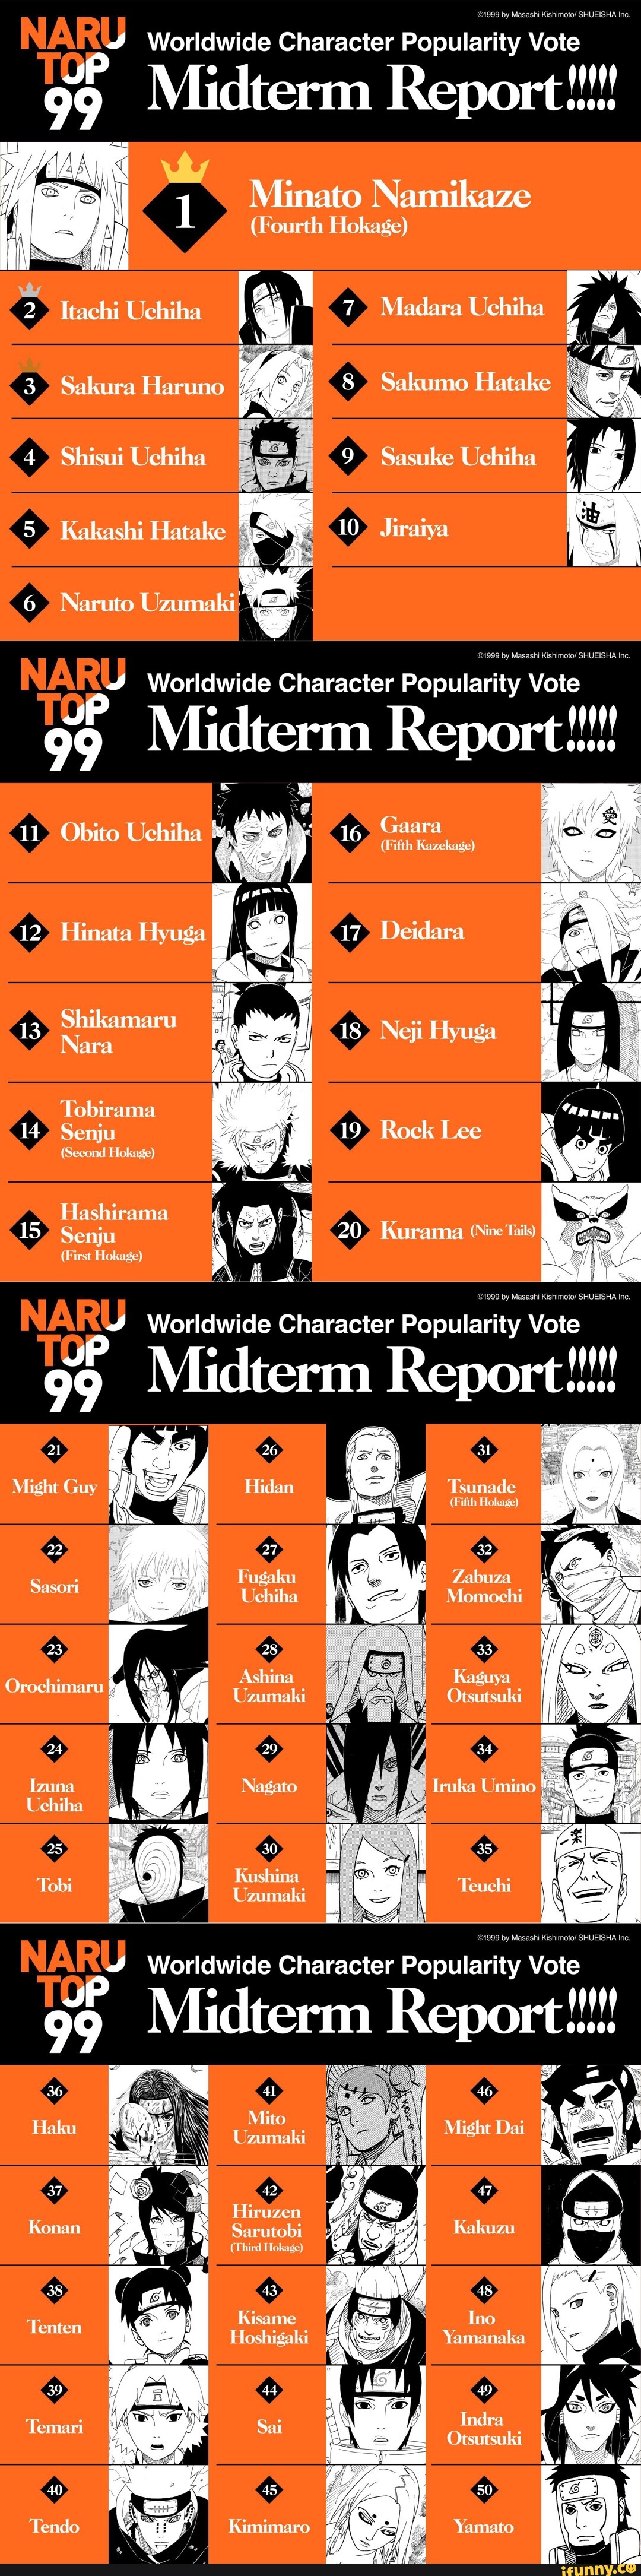 NARUTOP99 Worldwide Character Popularity Vote